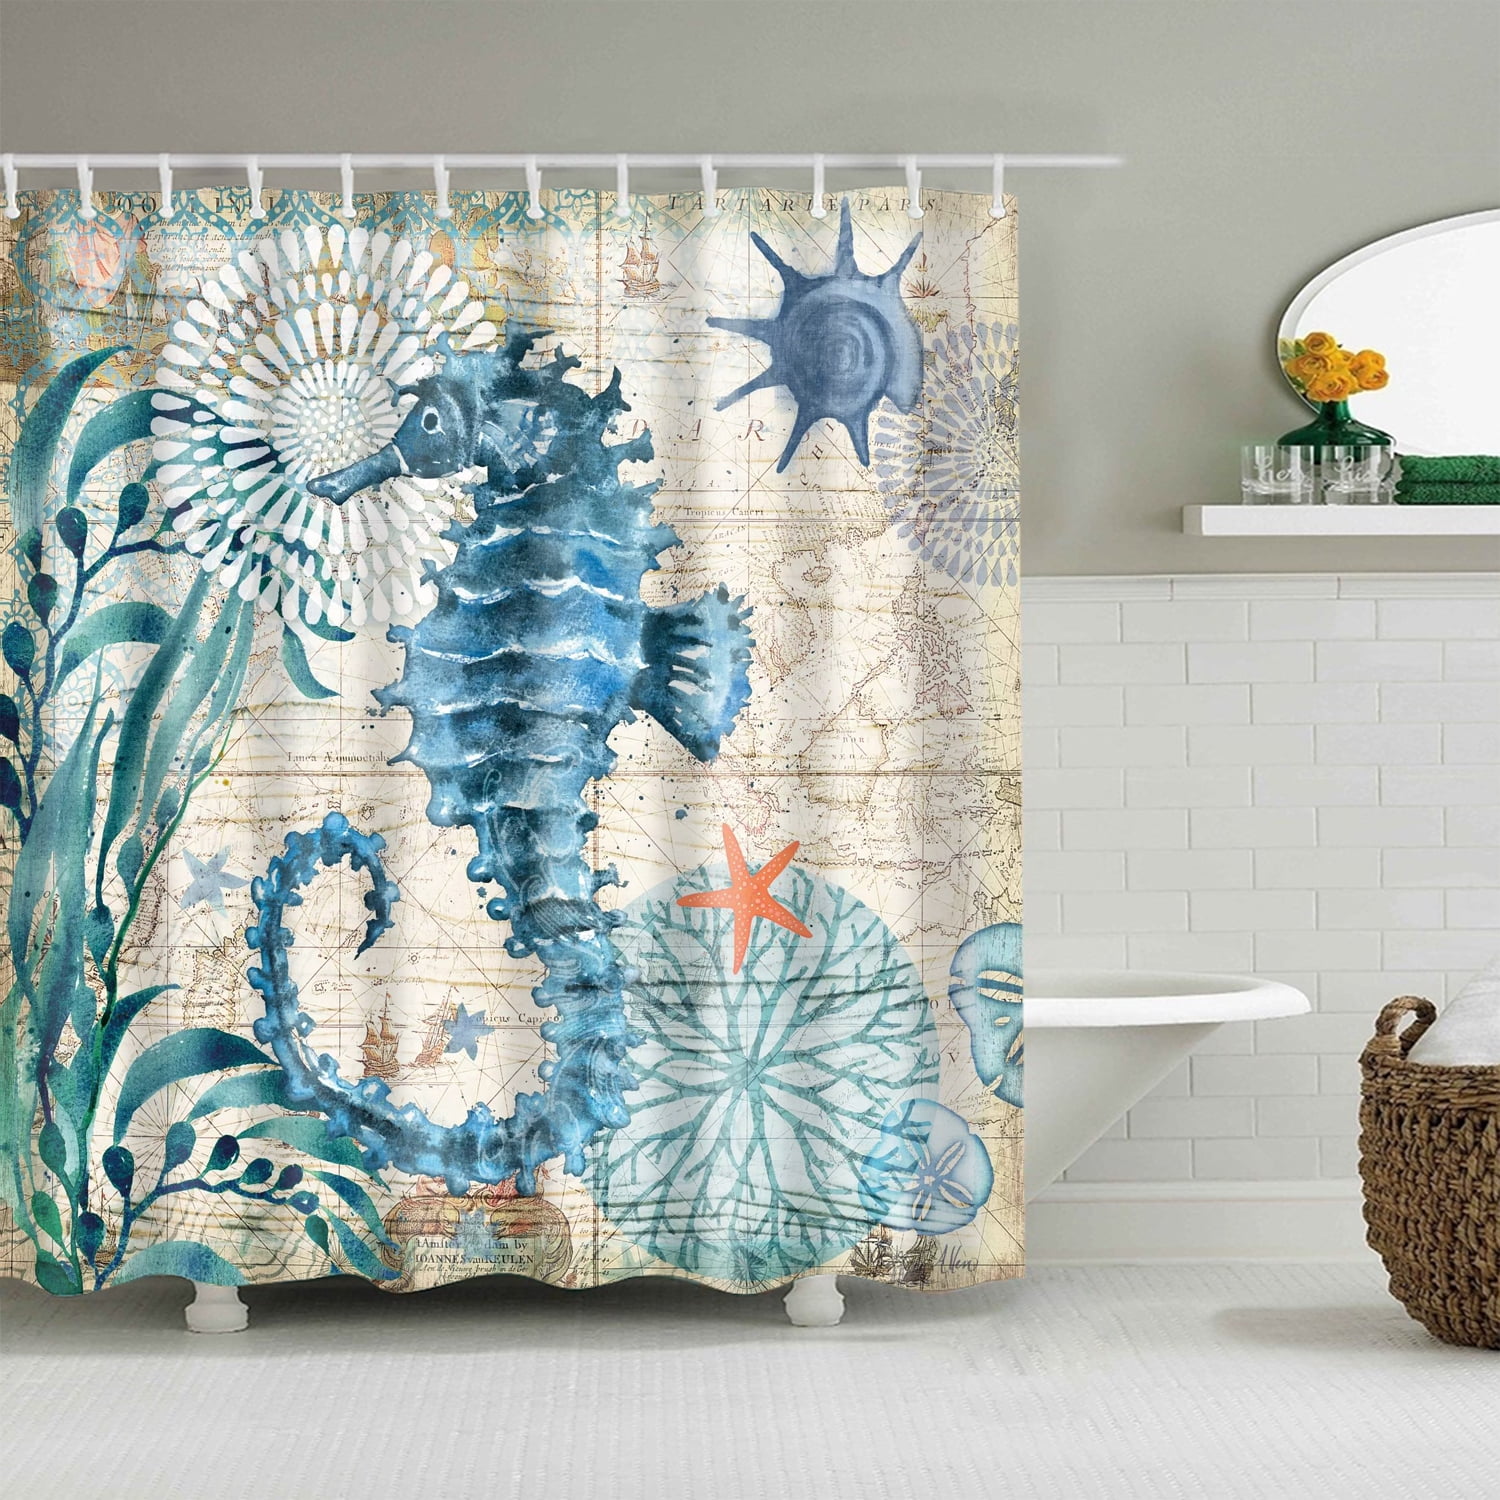 The Horse Theme  Waterproof Fabric Home Decor Shower Curtain Bathroom Mat 